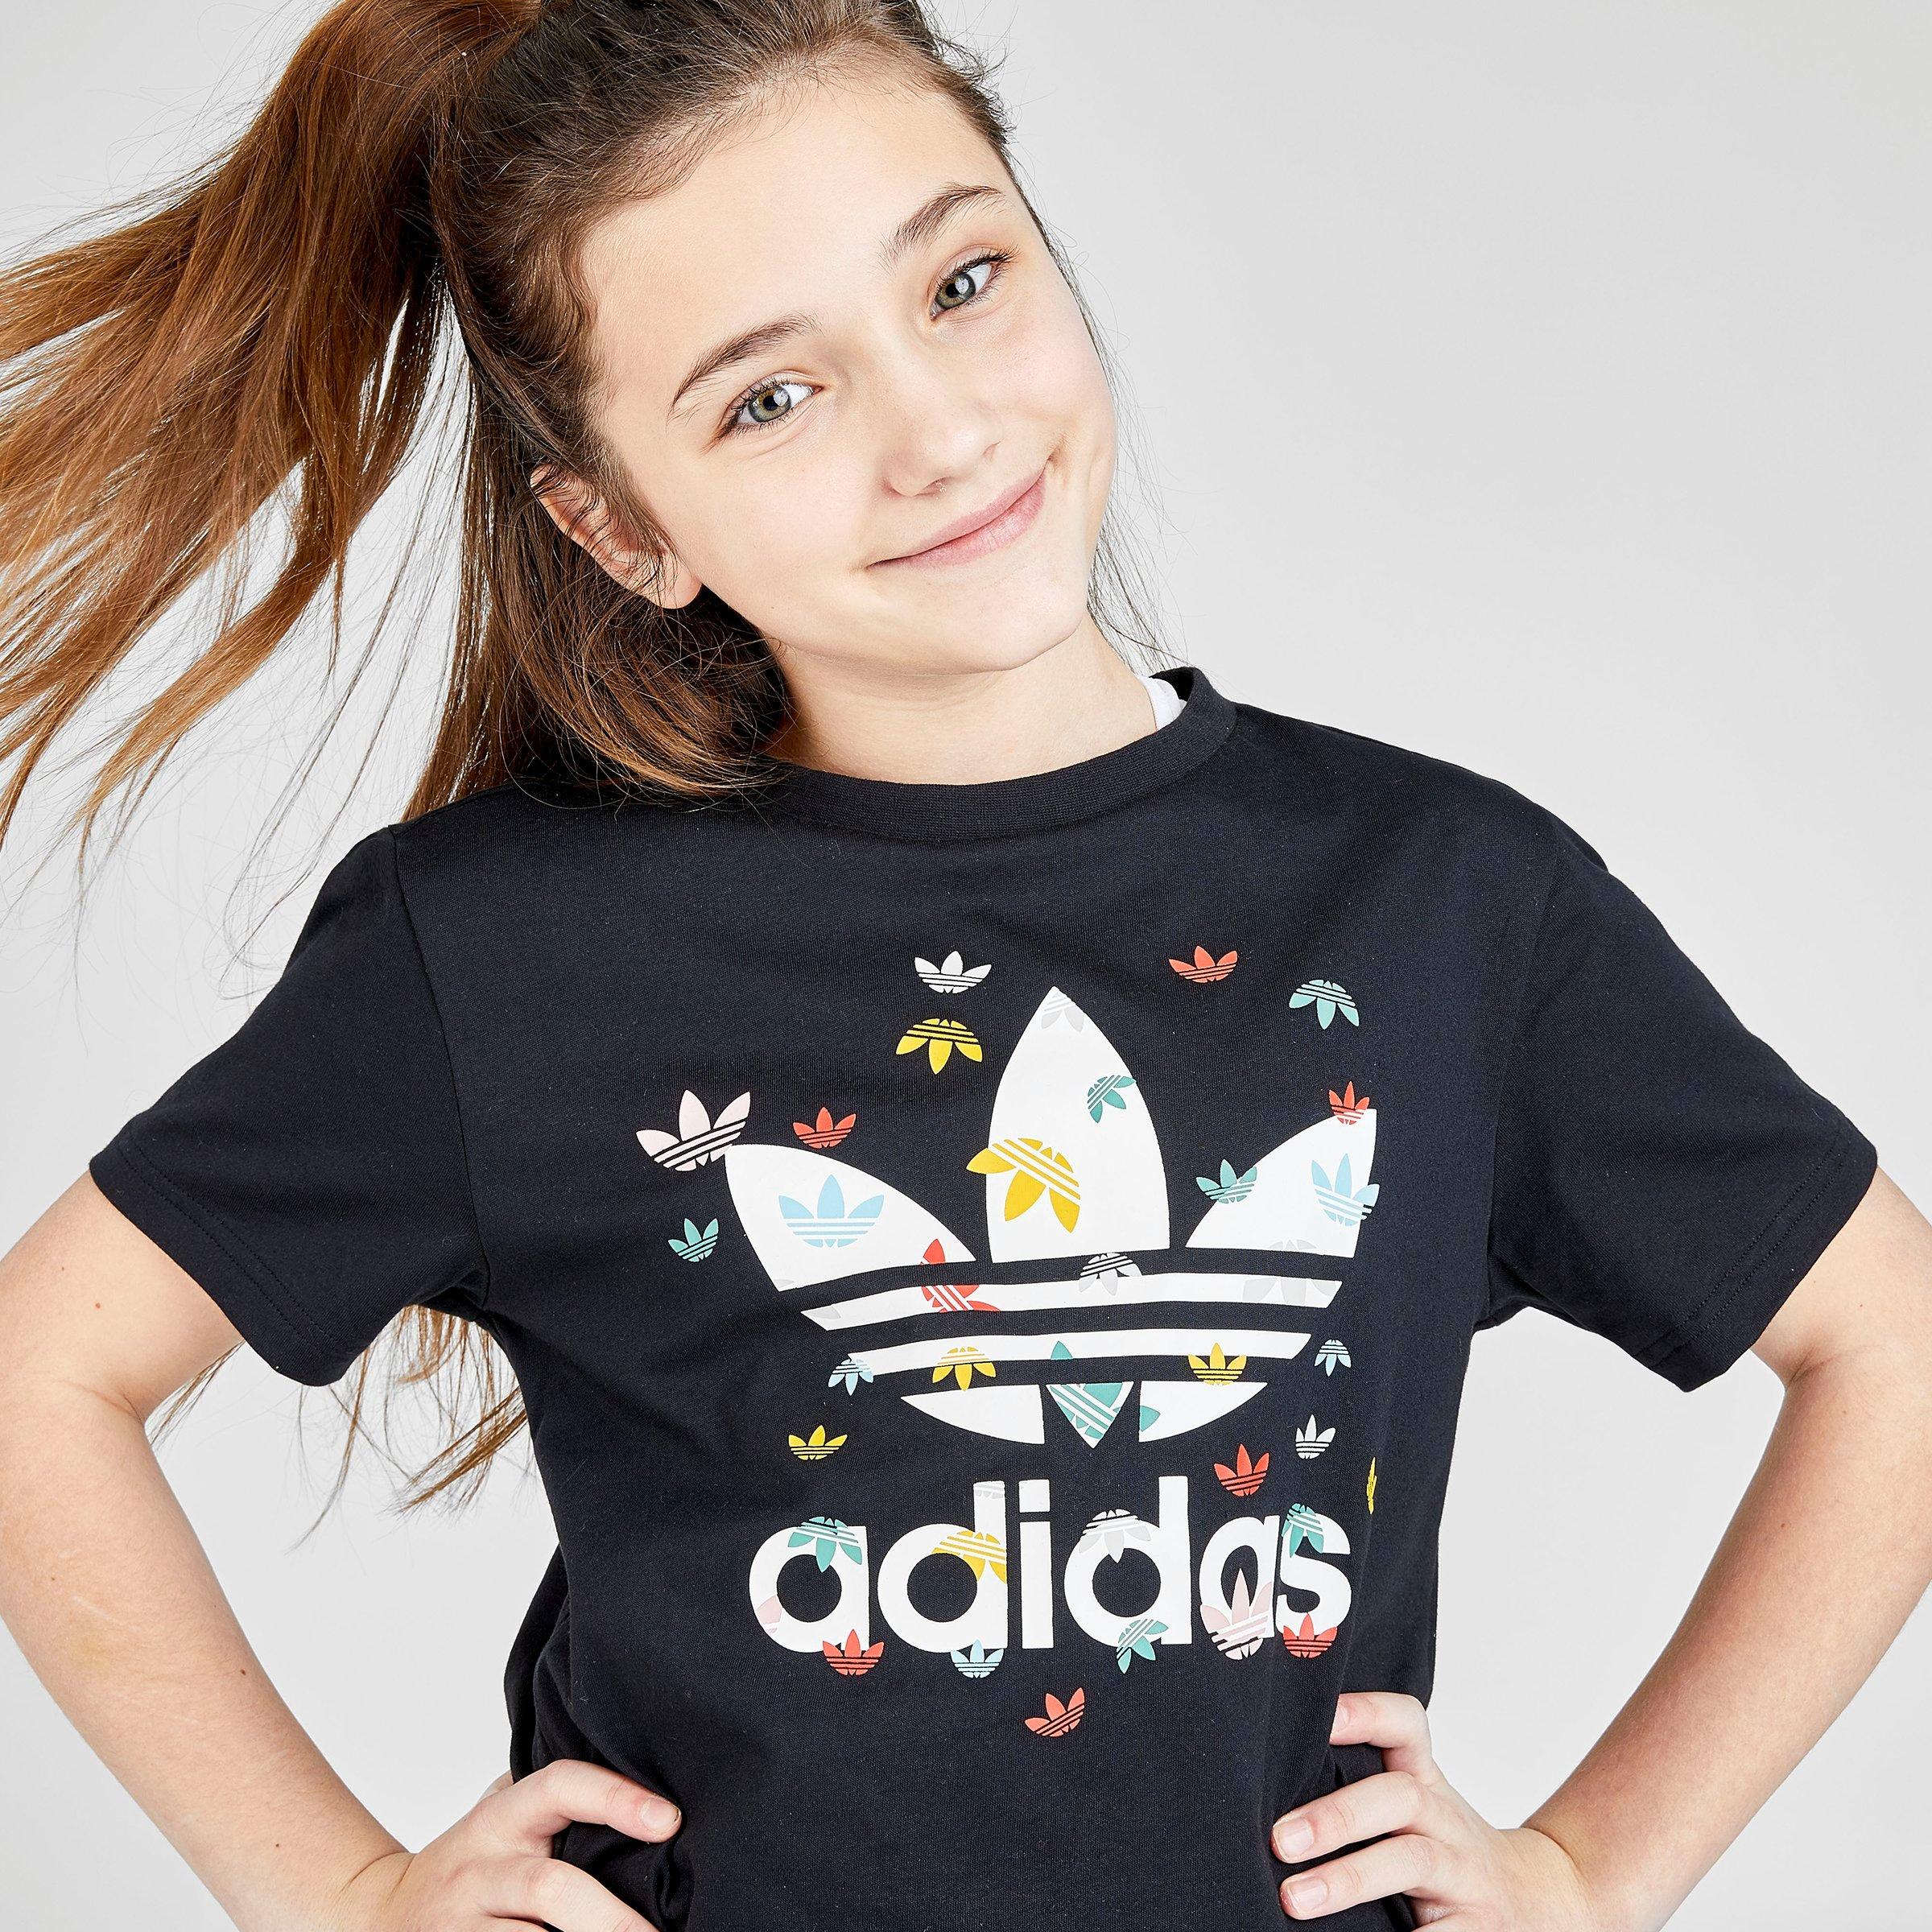 adidas shirts for girls